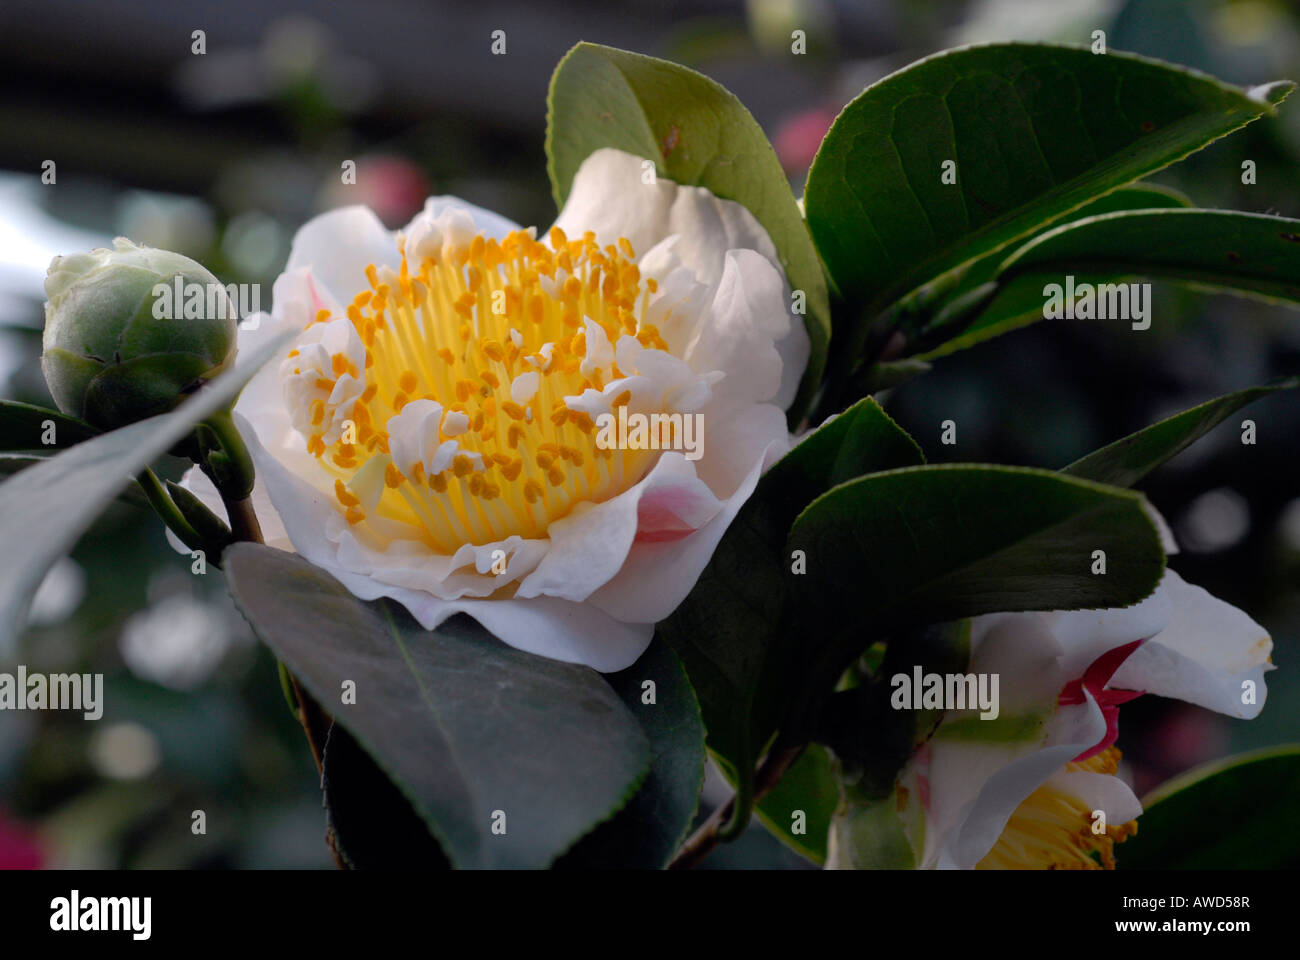 Japanese Camellia (Camellia japonica), botanical gardens in Germany, Europe Stock Photo